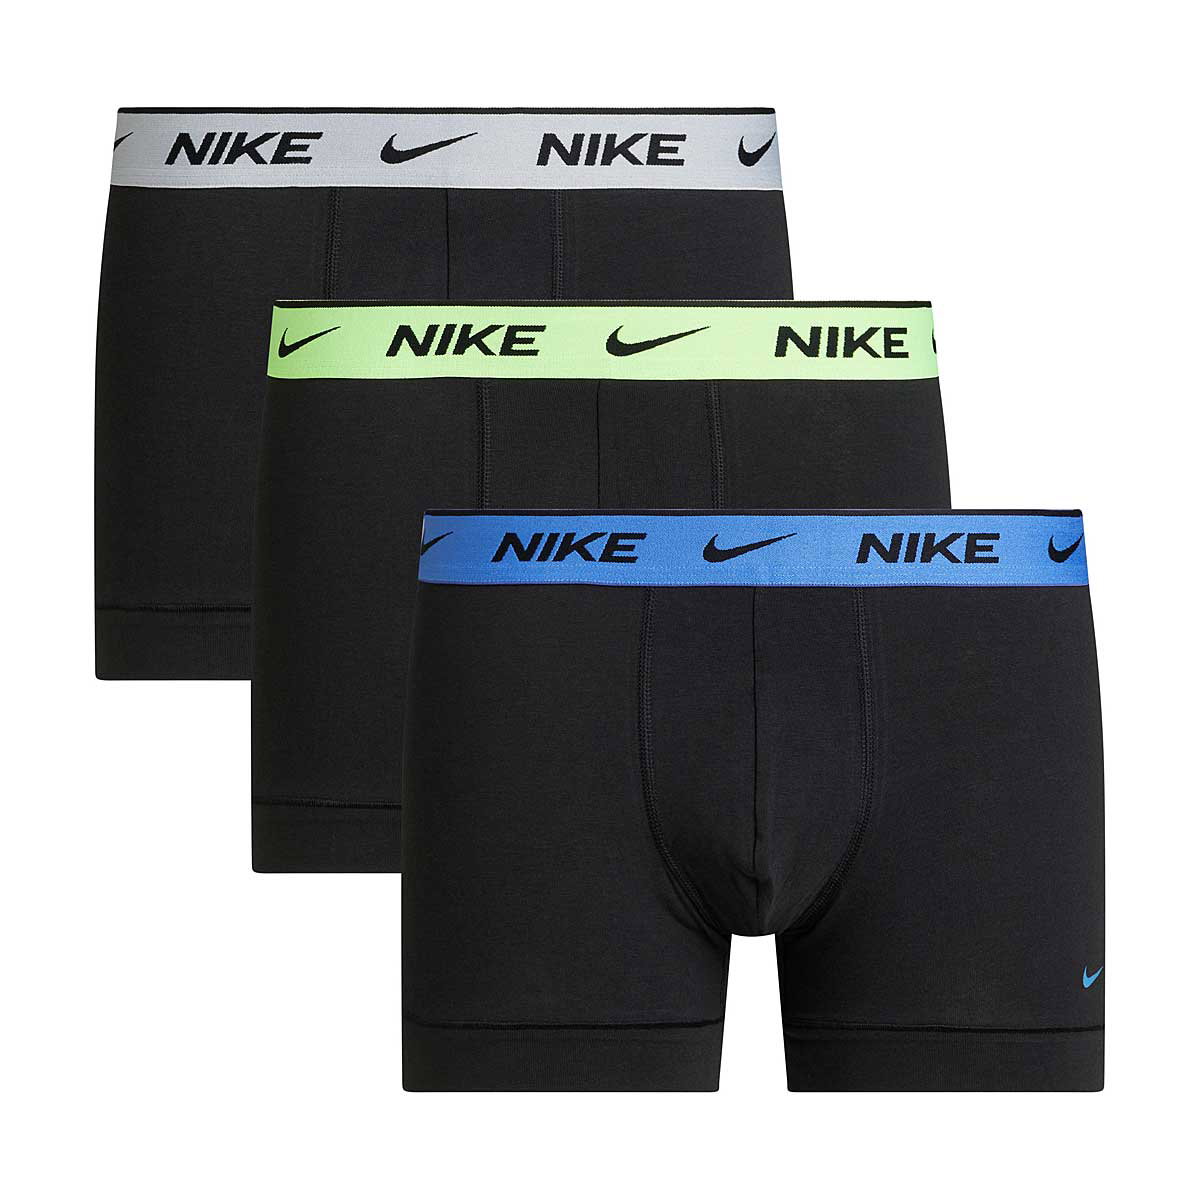 NIKE Boxer Nike underwear Trunk 3pk 7-315 pas cher 